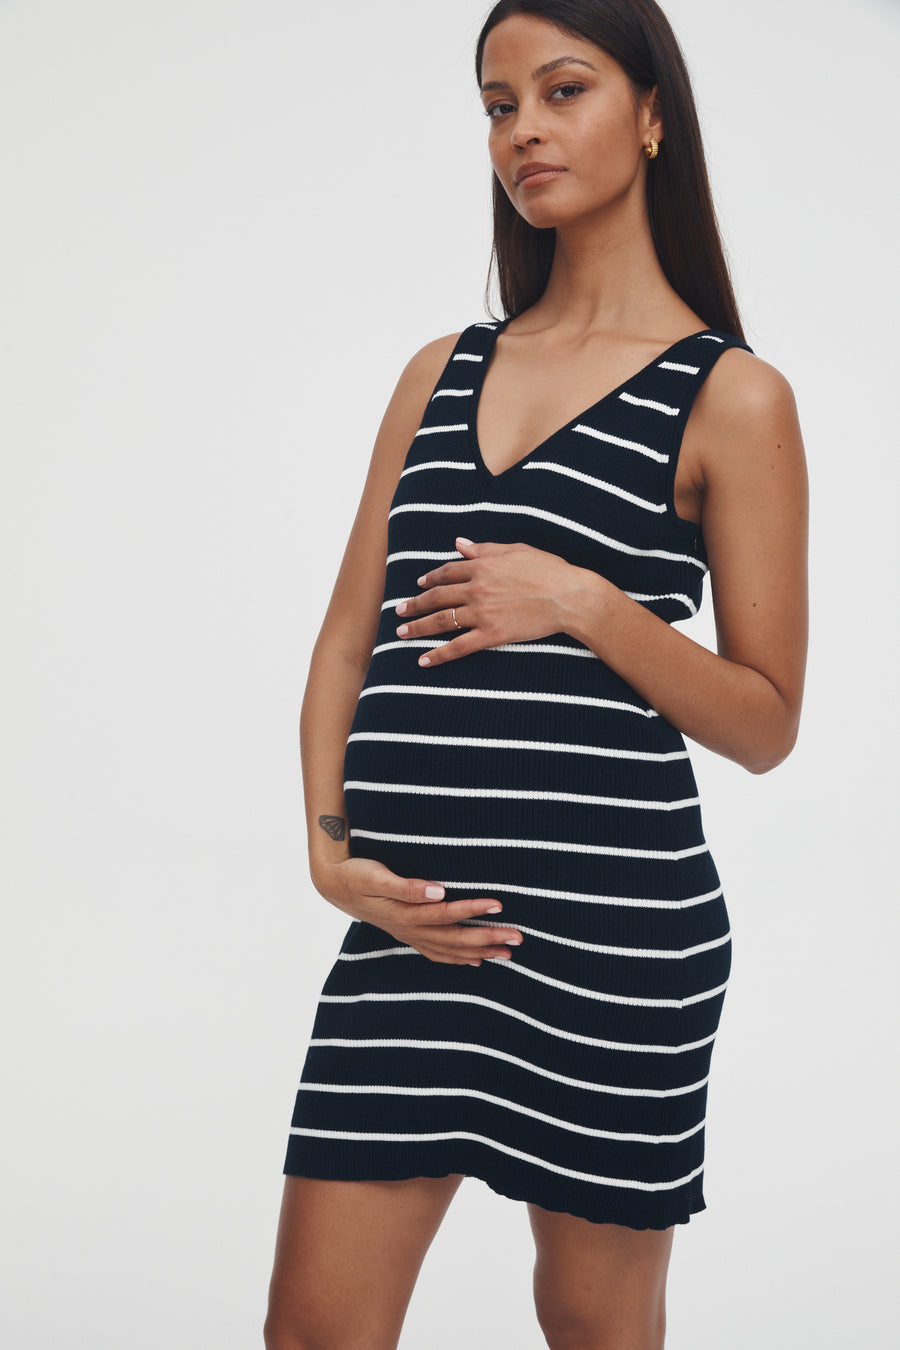 Summer Maternity Dress (Navy Stripe) 3